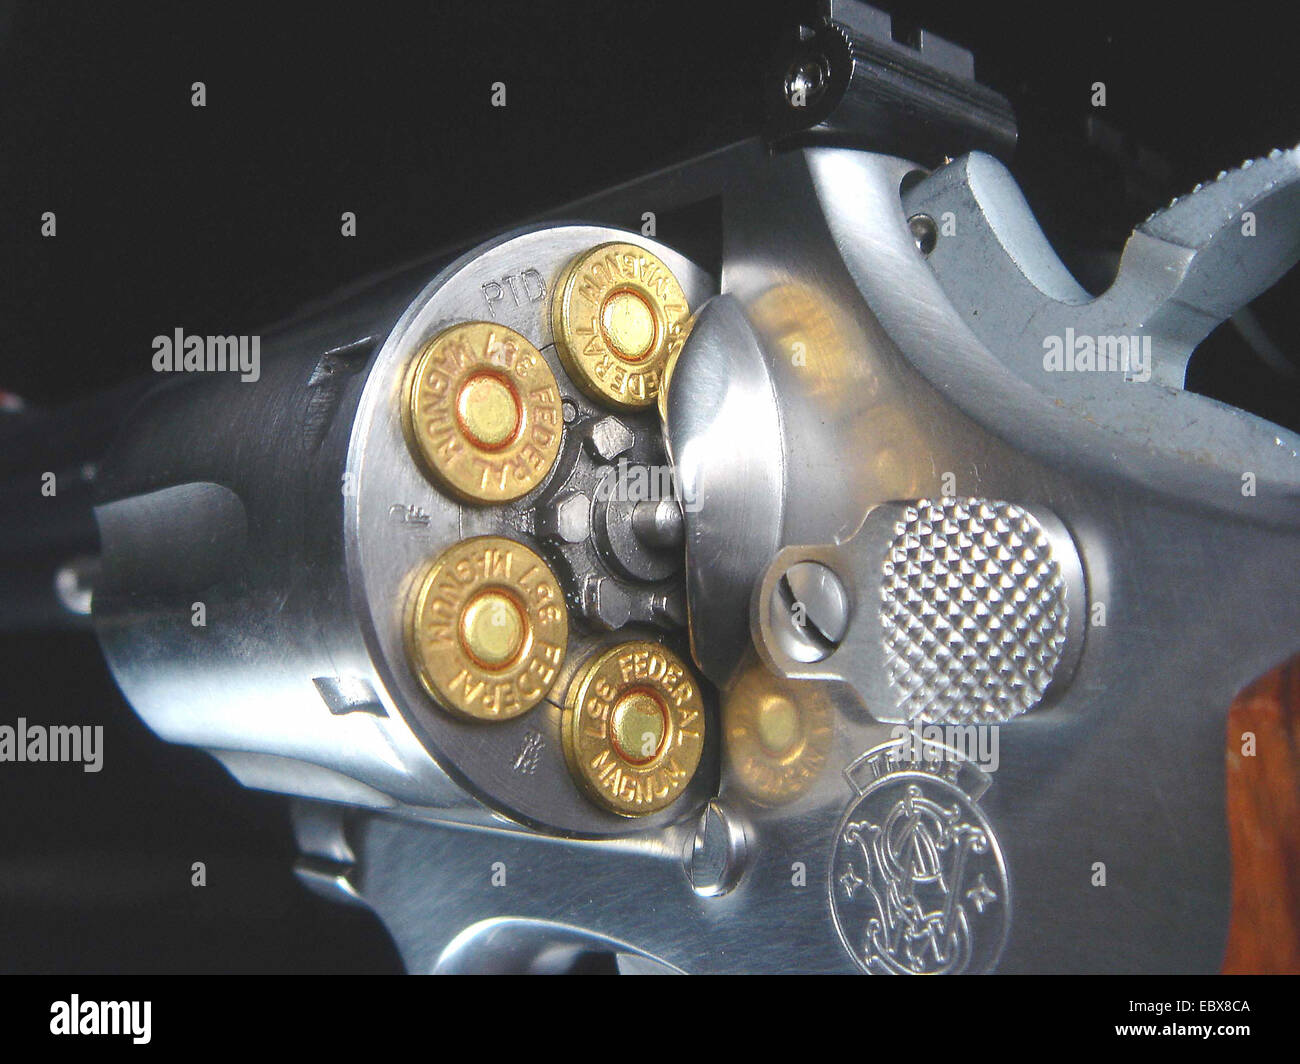 revolver, loaded Stock Photo